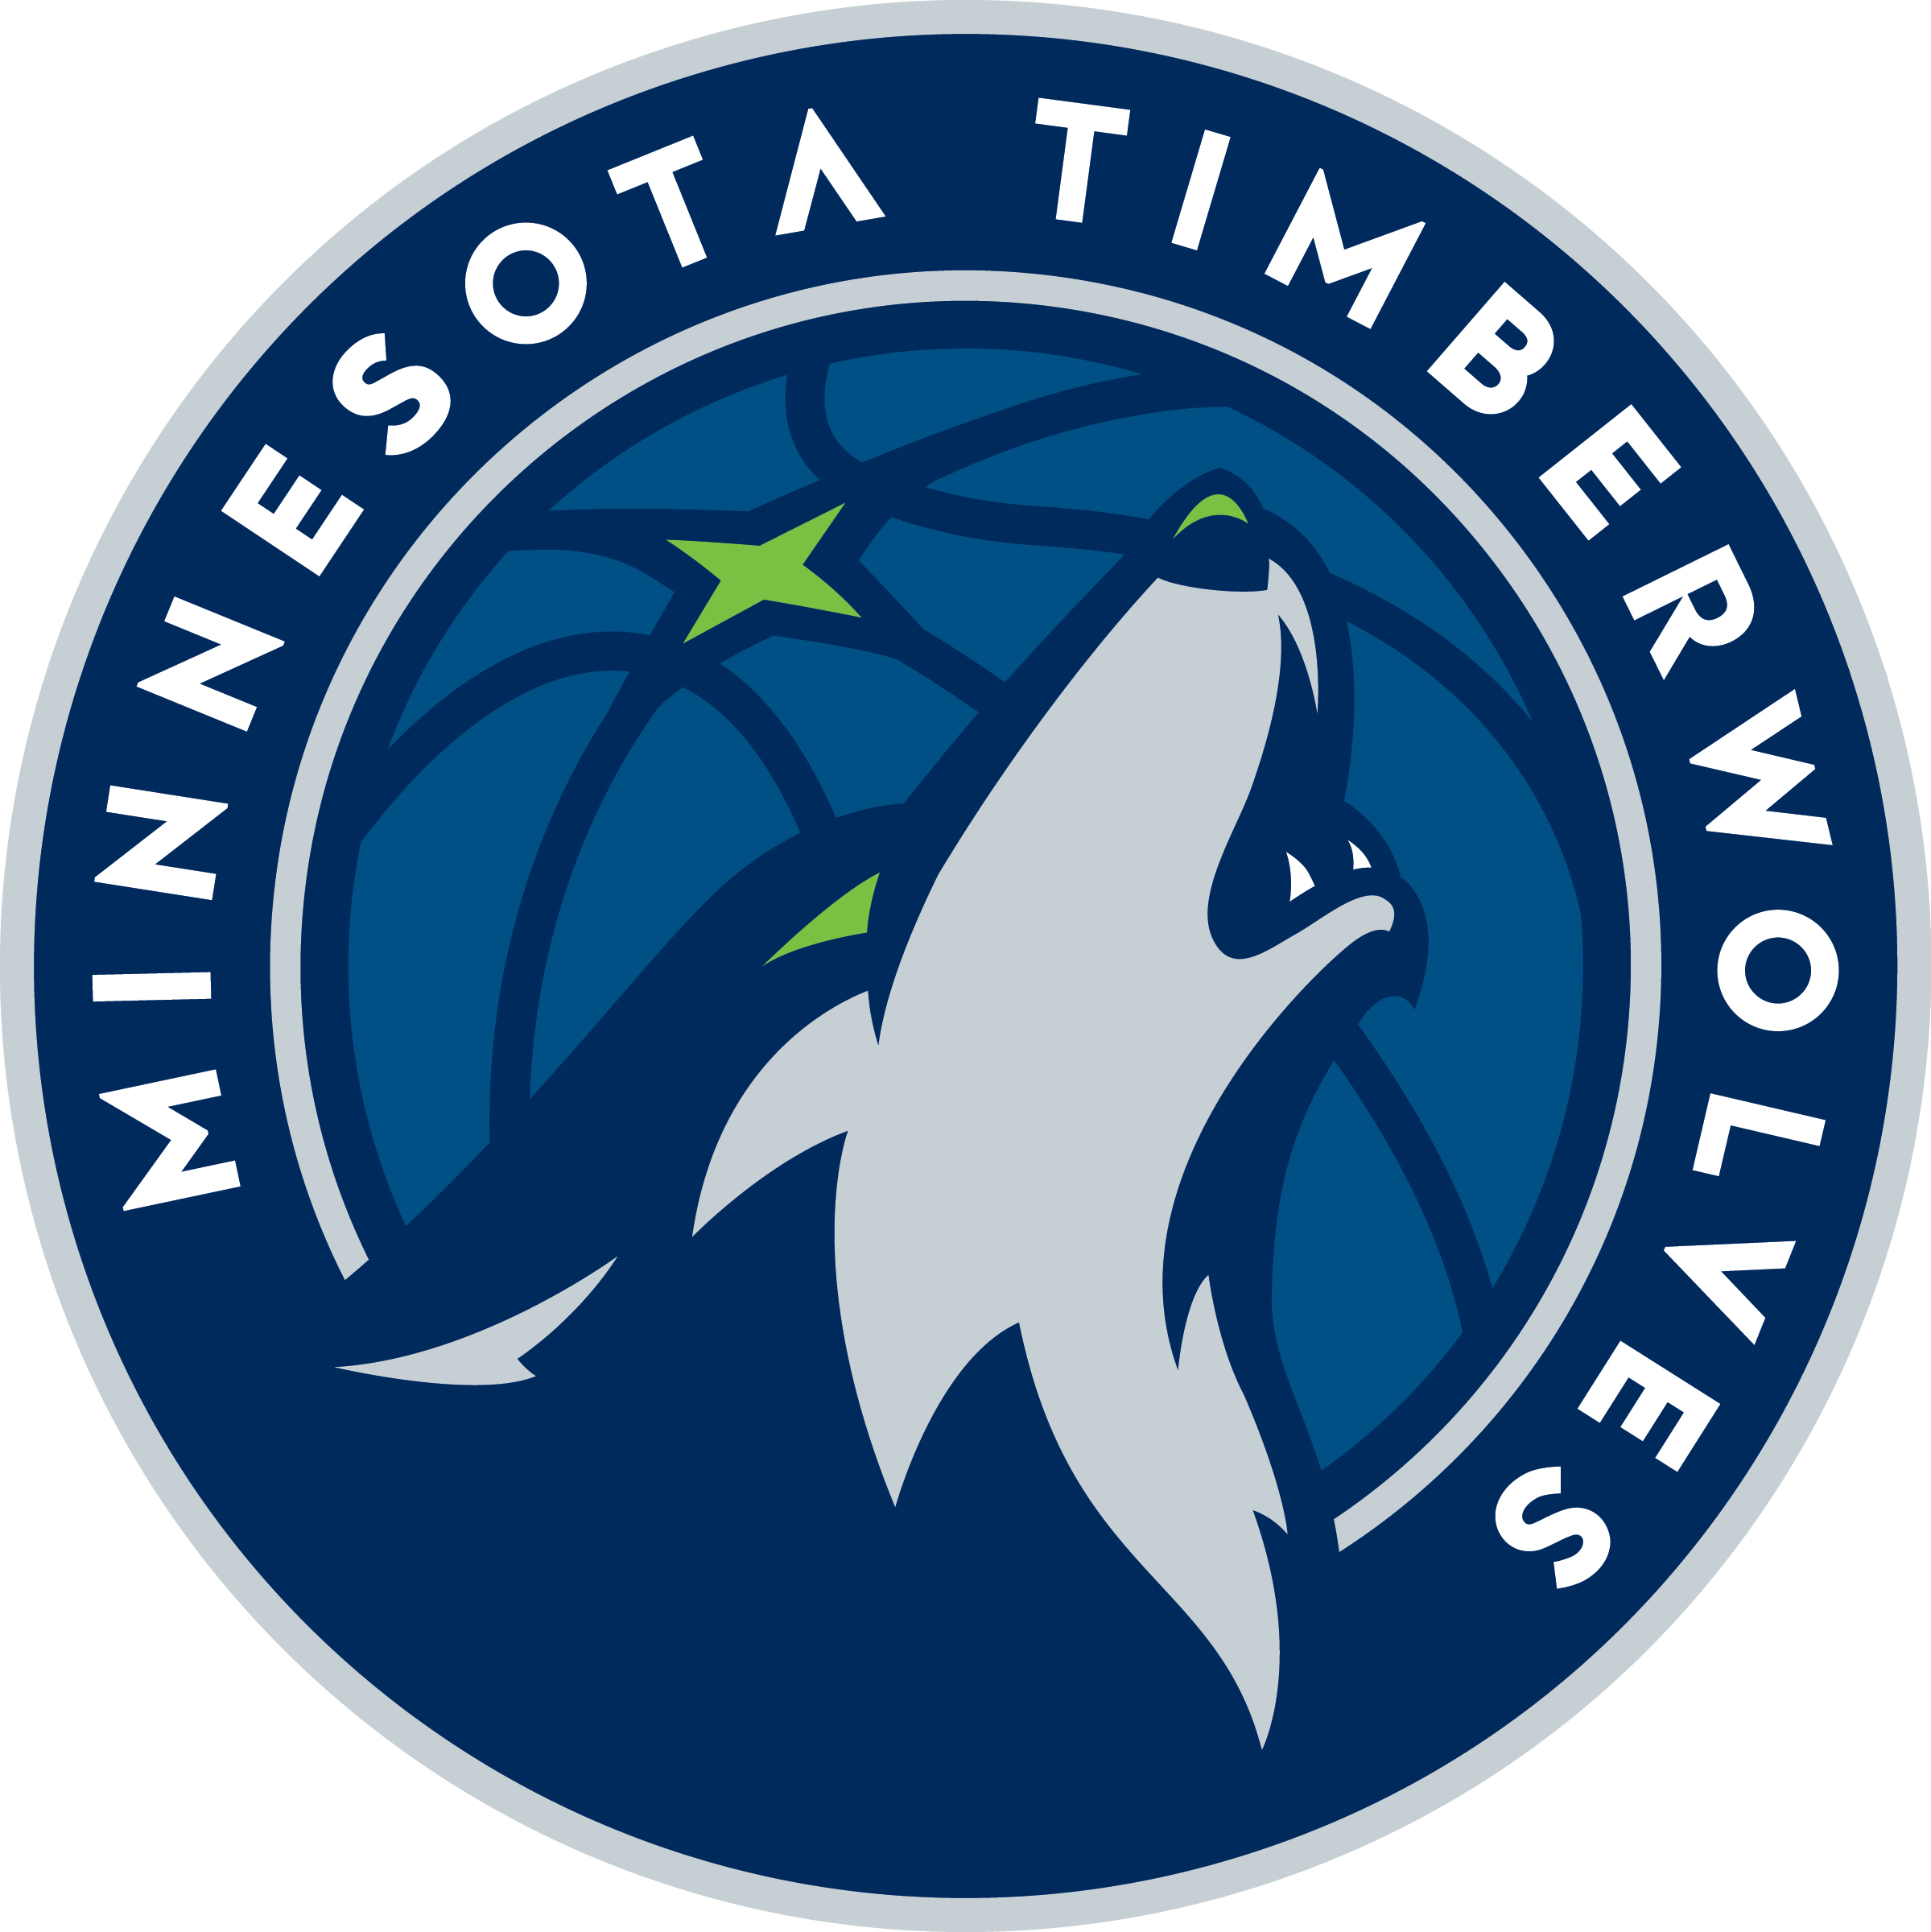 Minnesota Timberwolves (Northwest Division)